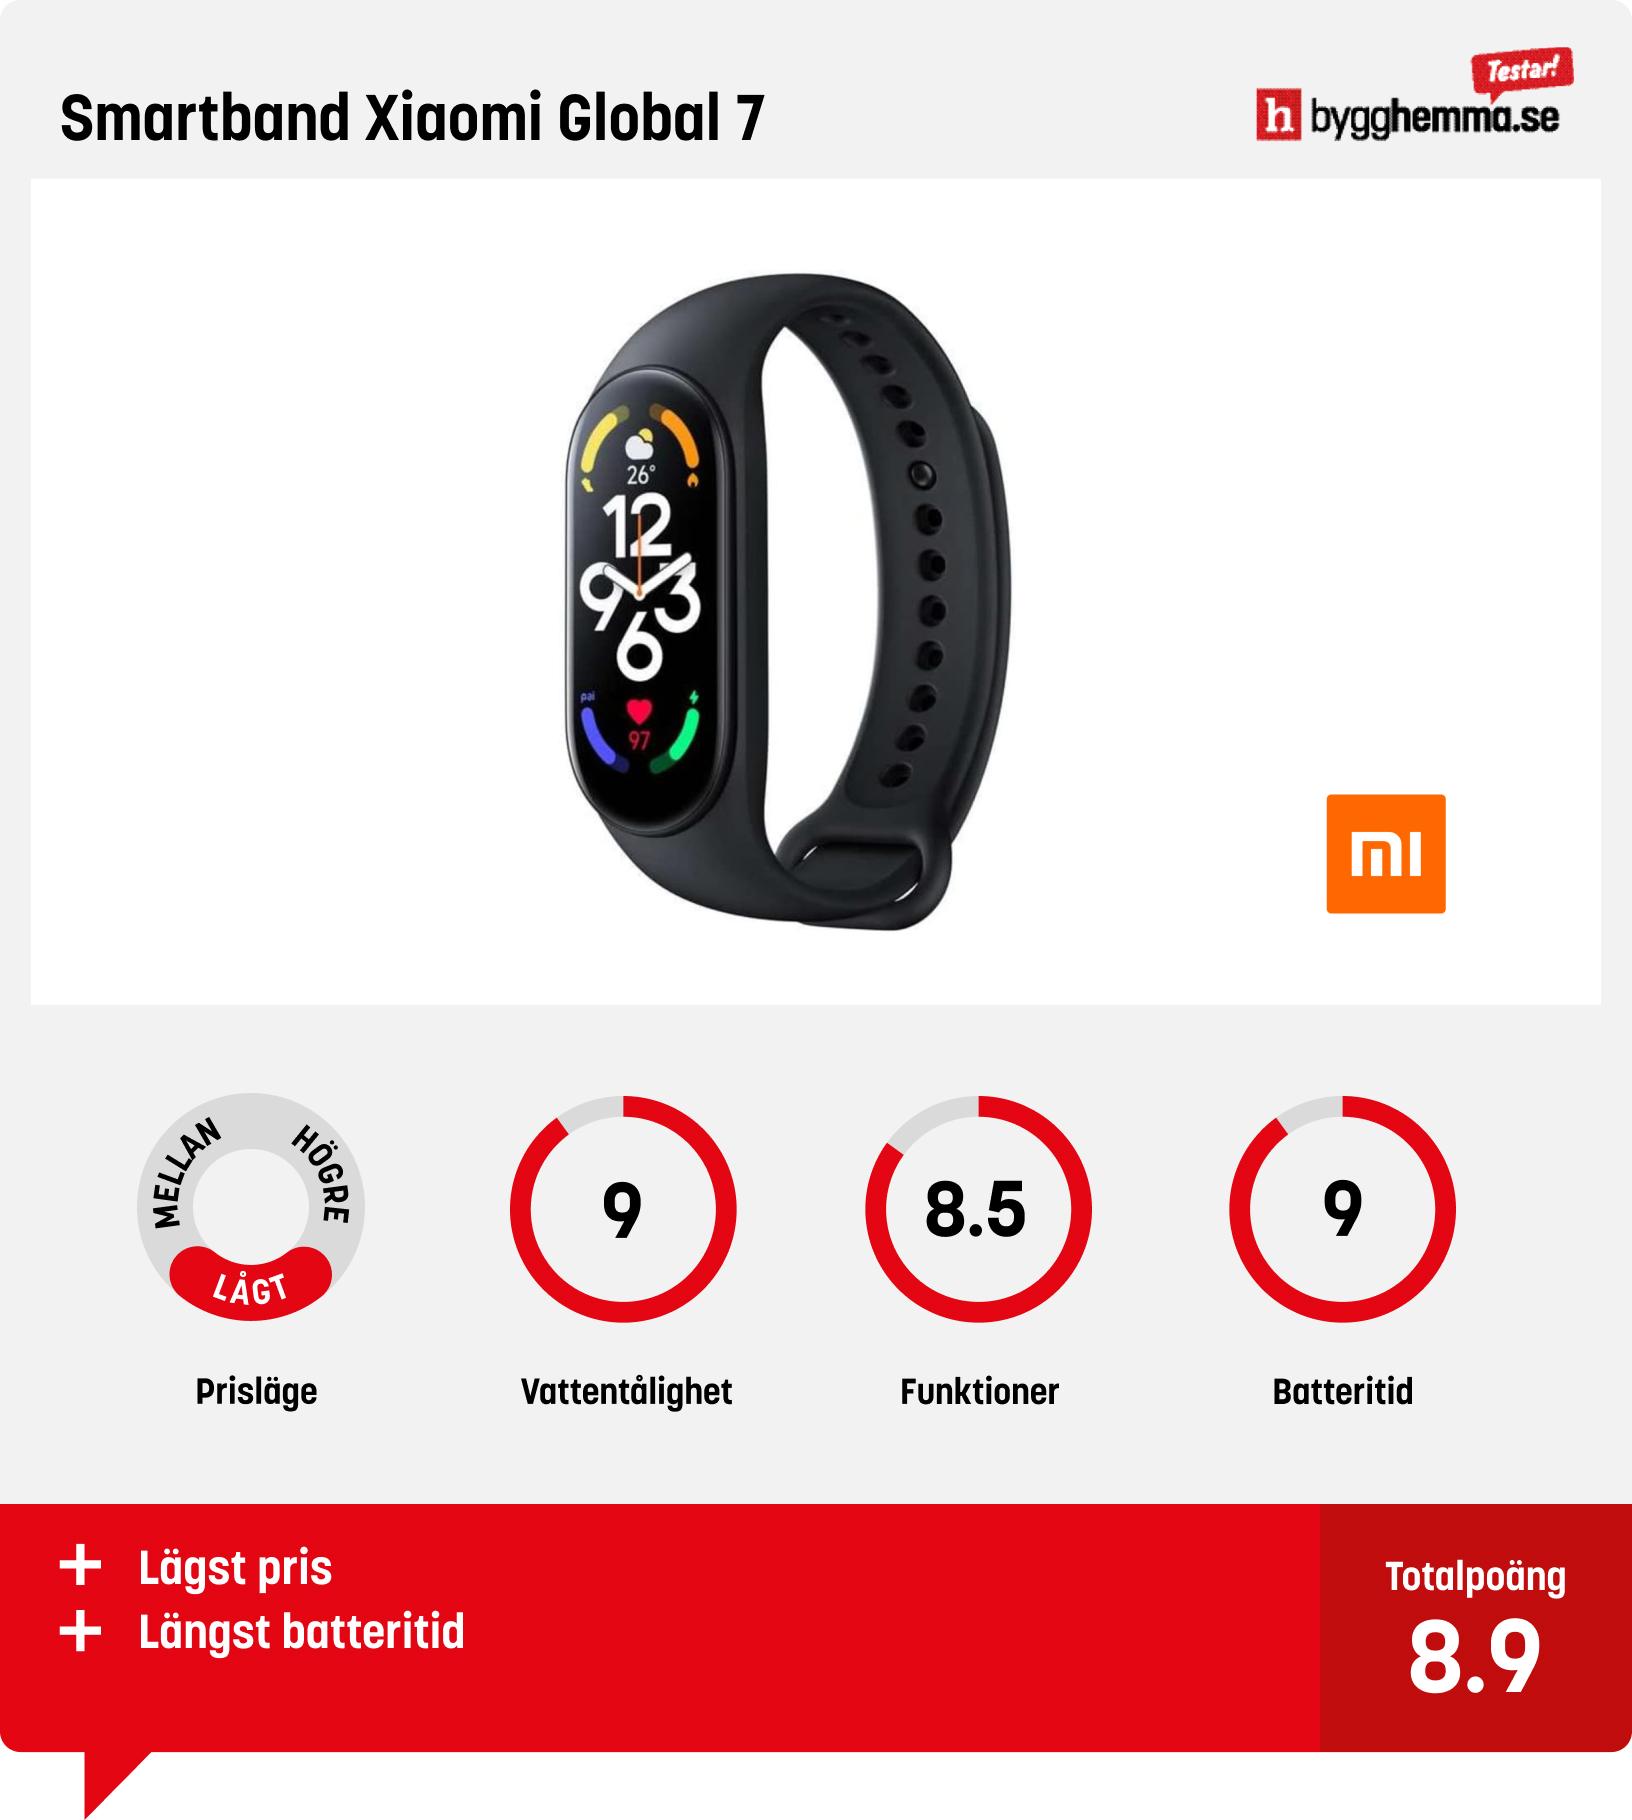 Smartwatch bäst i test - Smartband Xiaomi Global 7